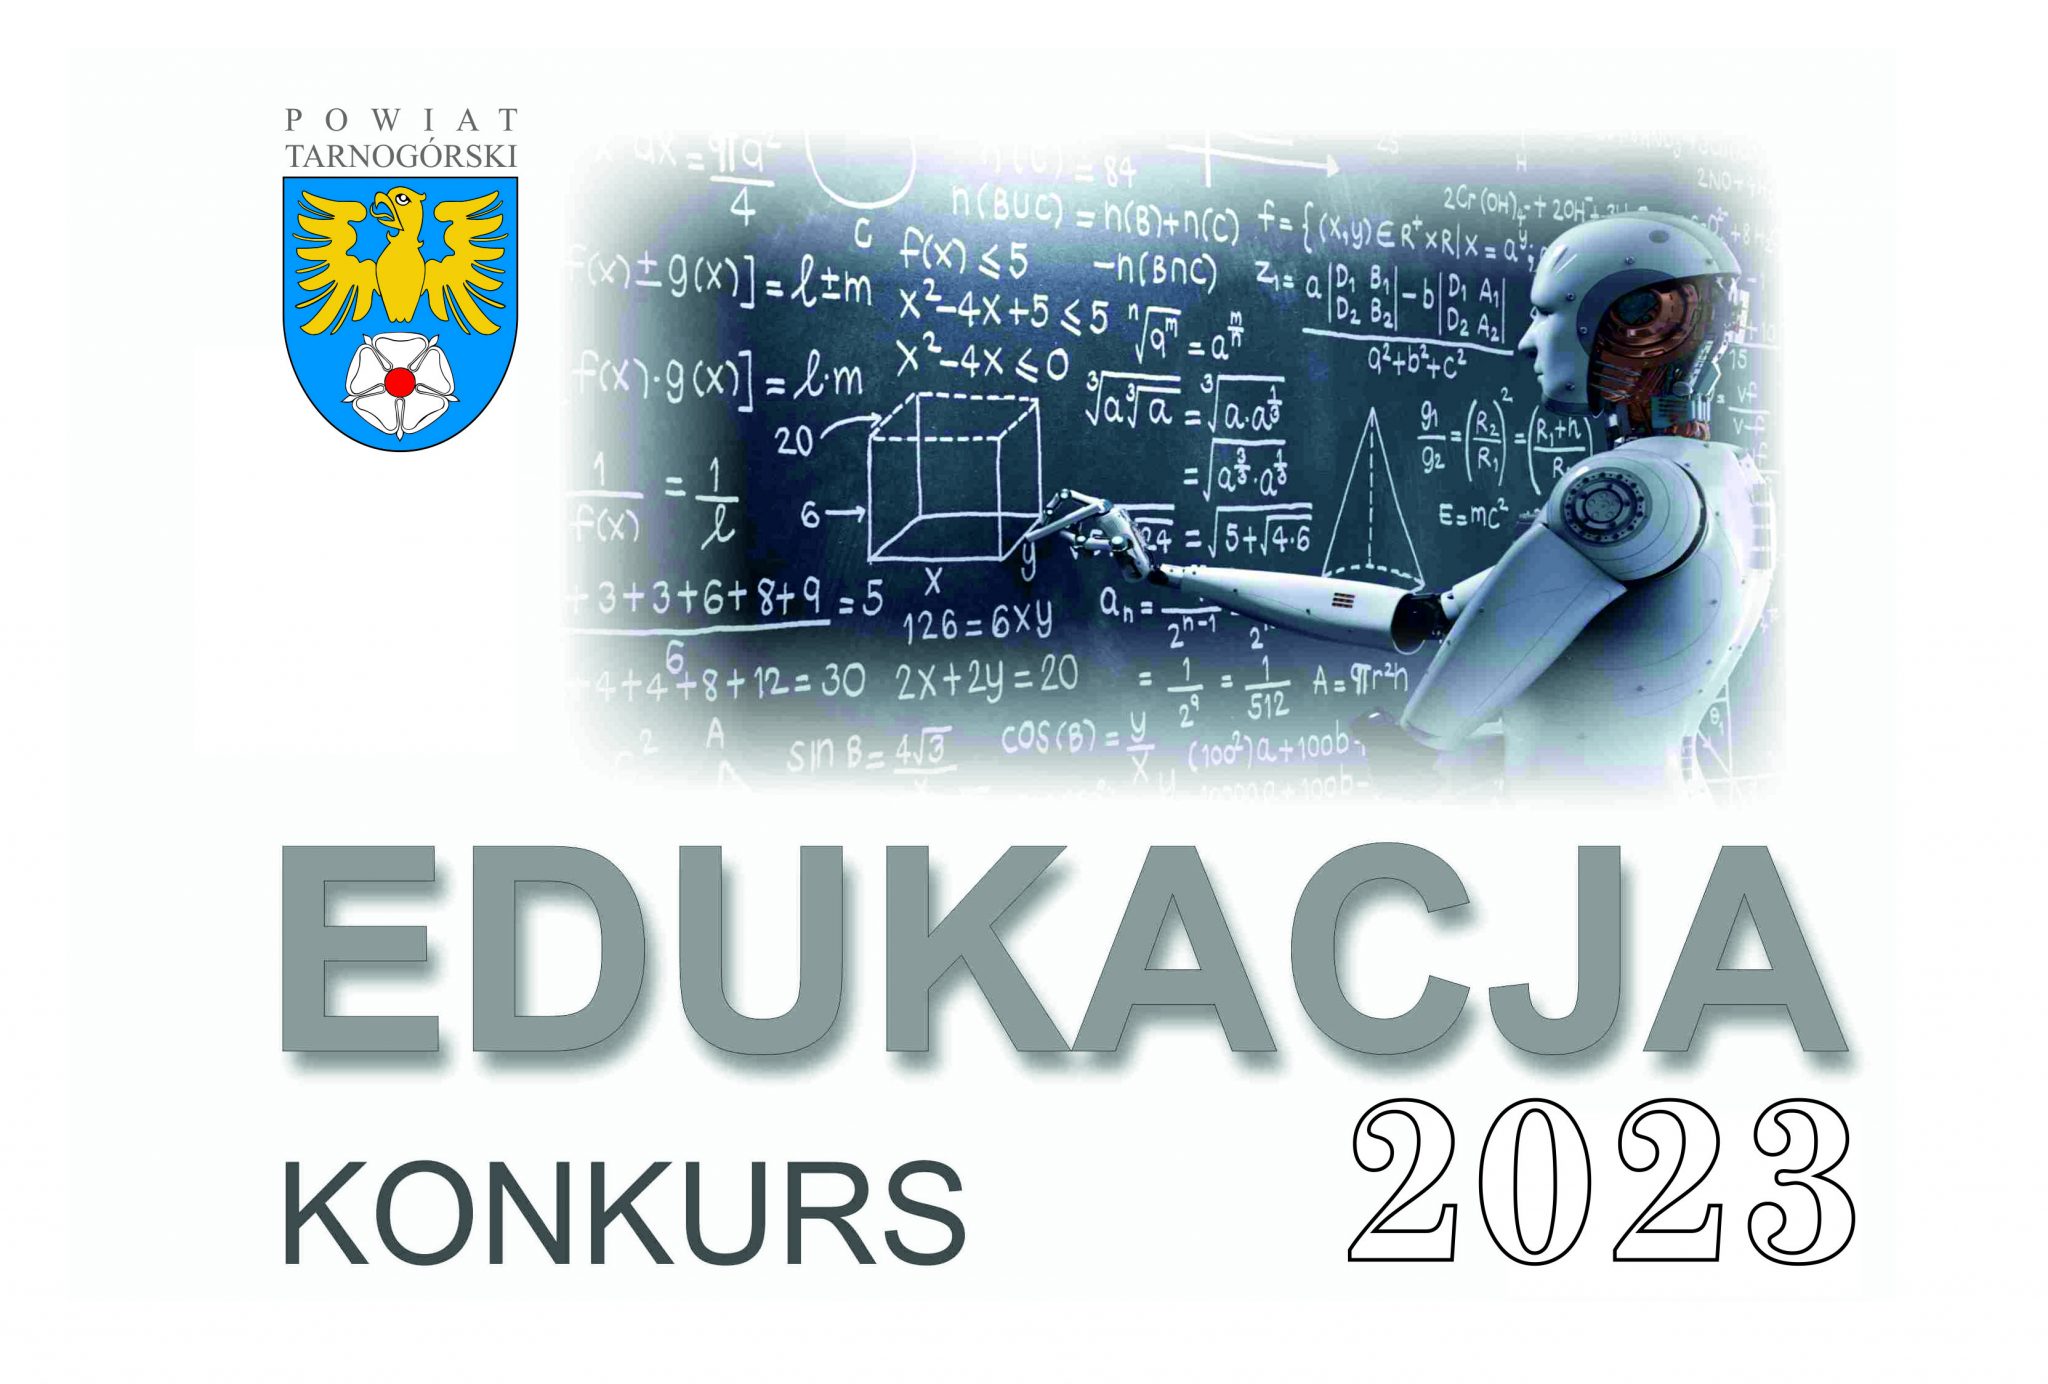 plakat konkurs edukacja 2023